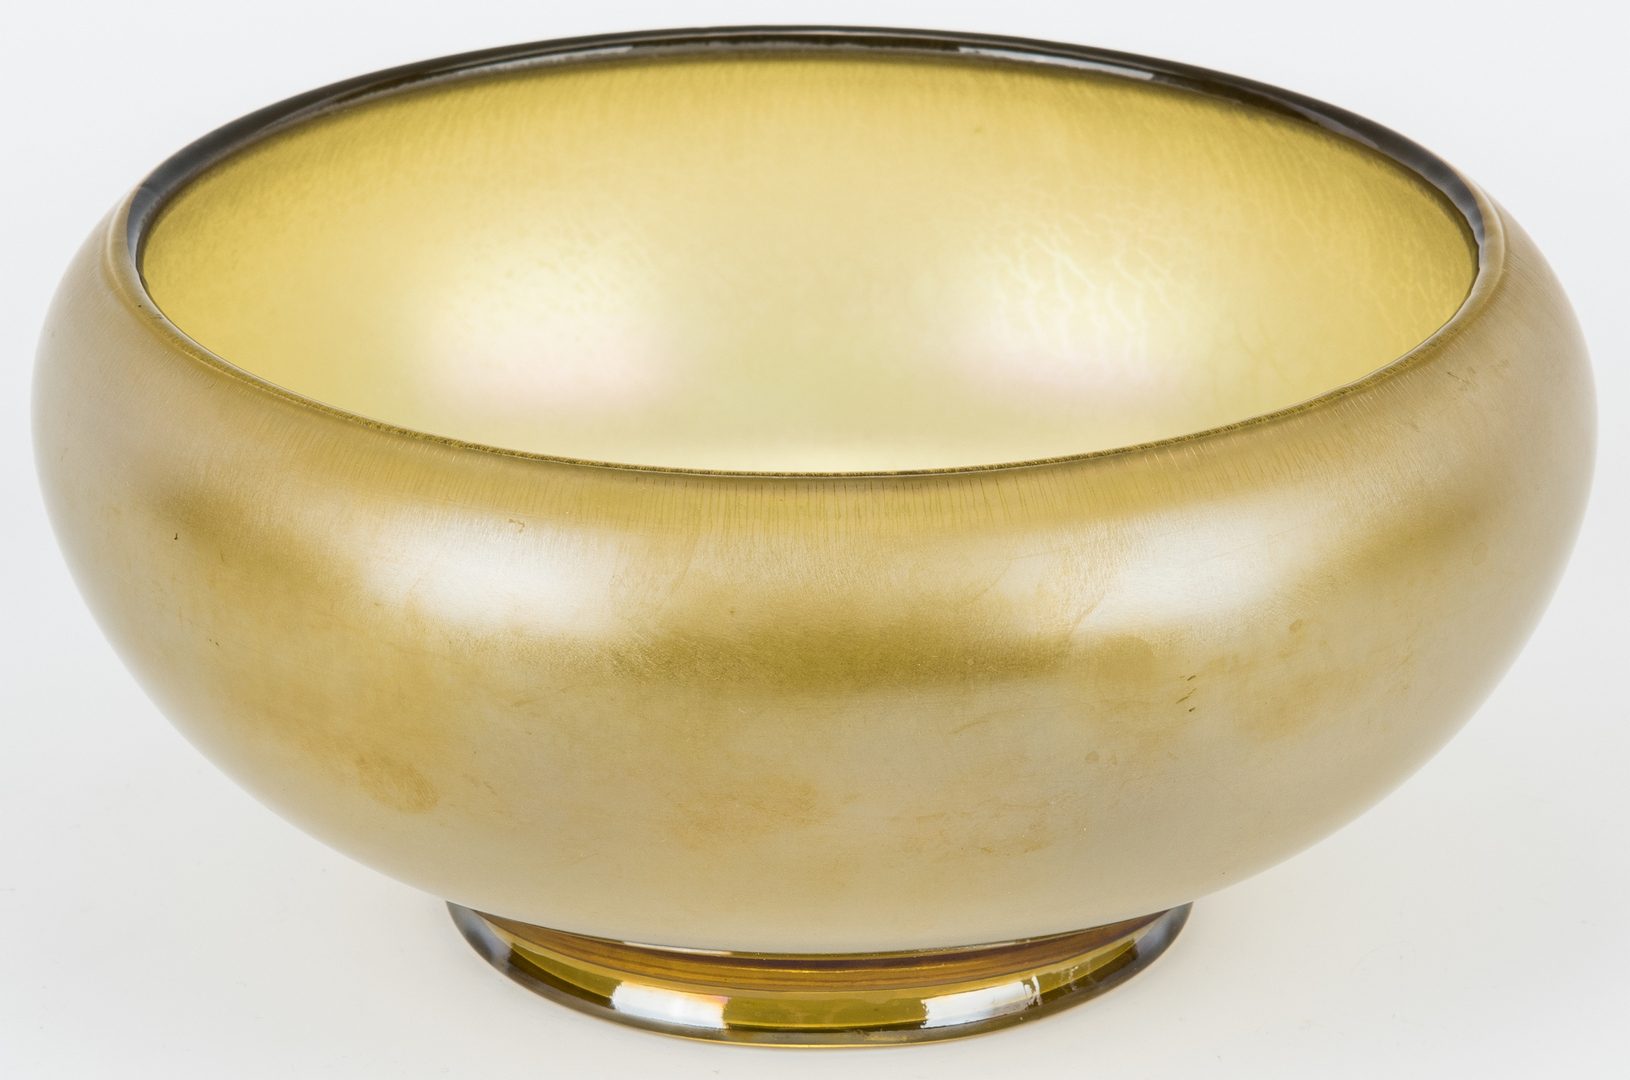 Lot 194: 7 Art Glass Items, incl. Lamp, Shades, Bowl & Vase